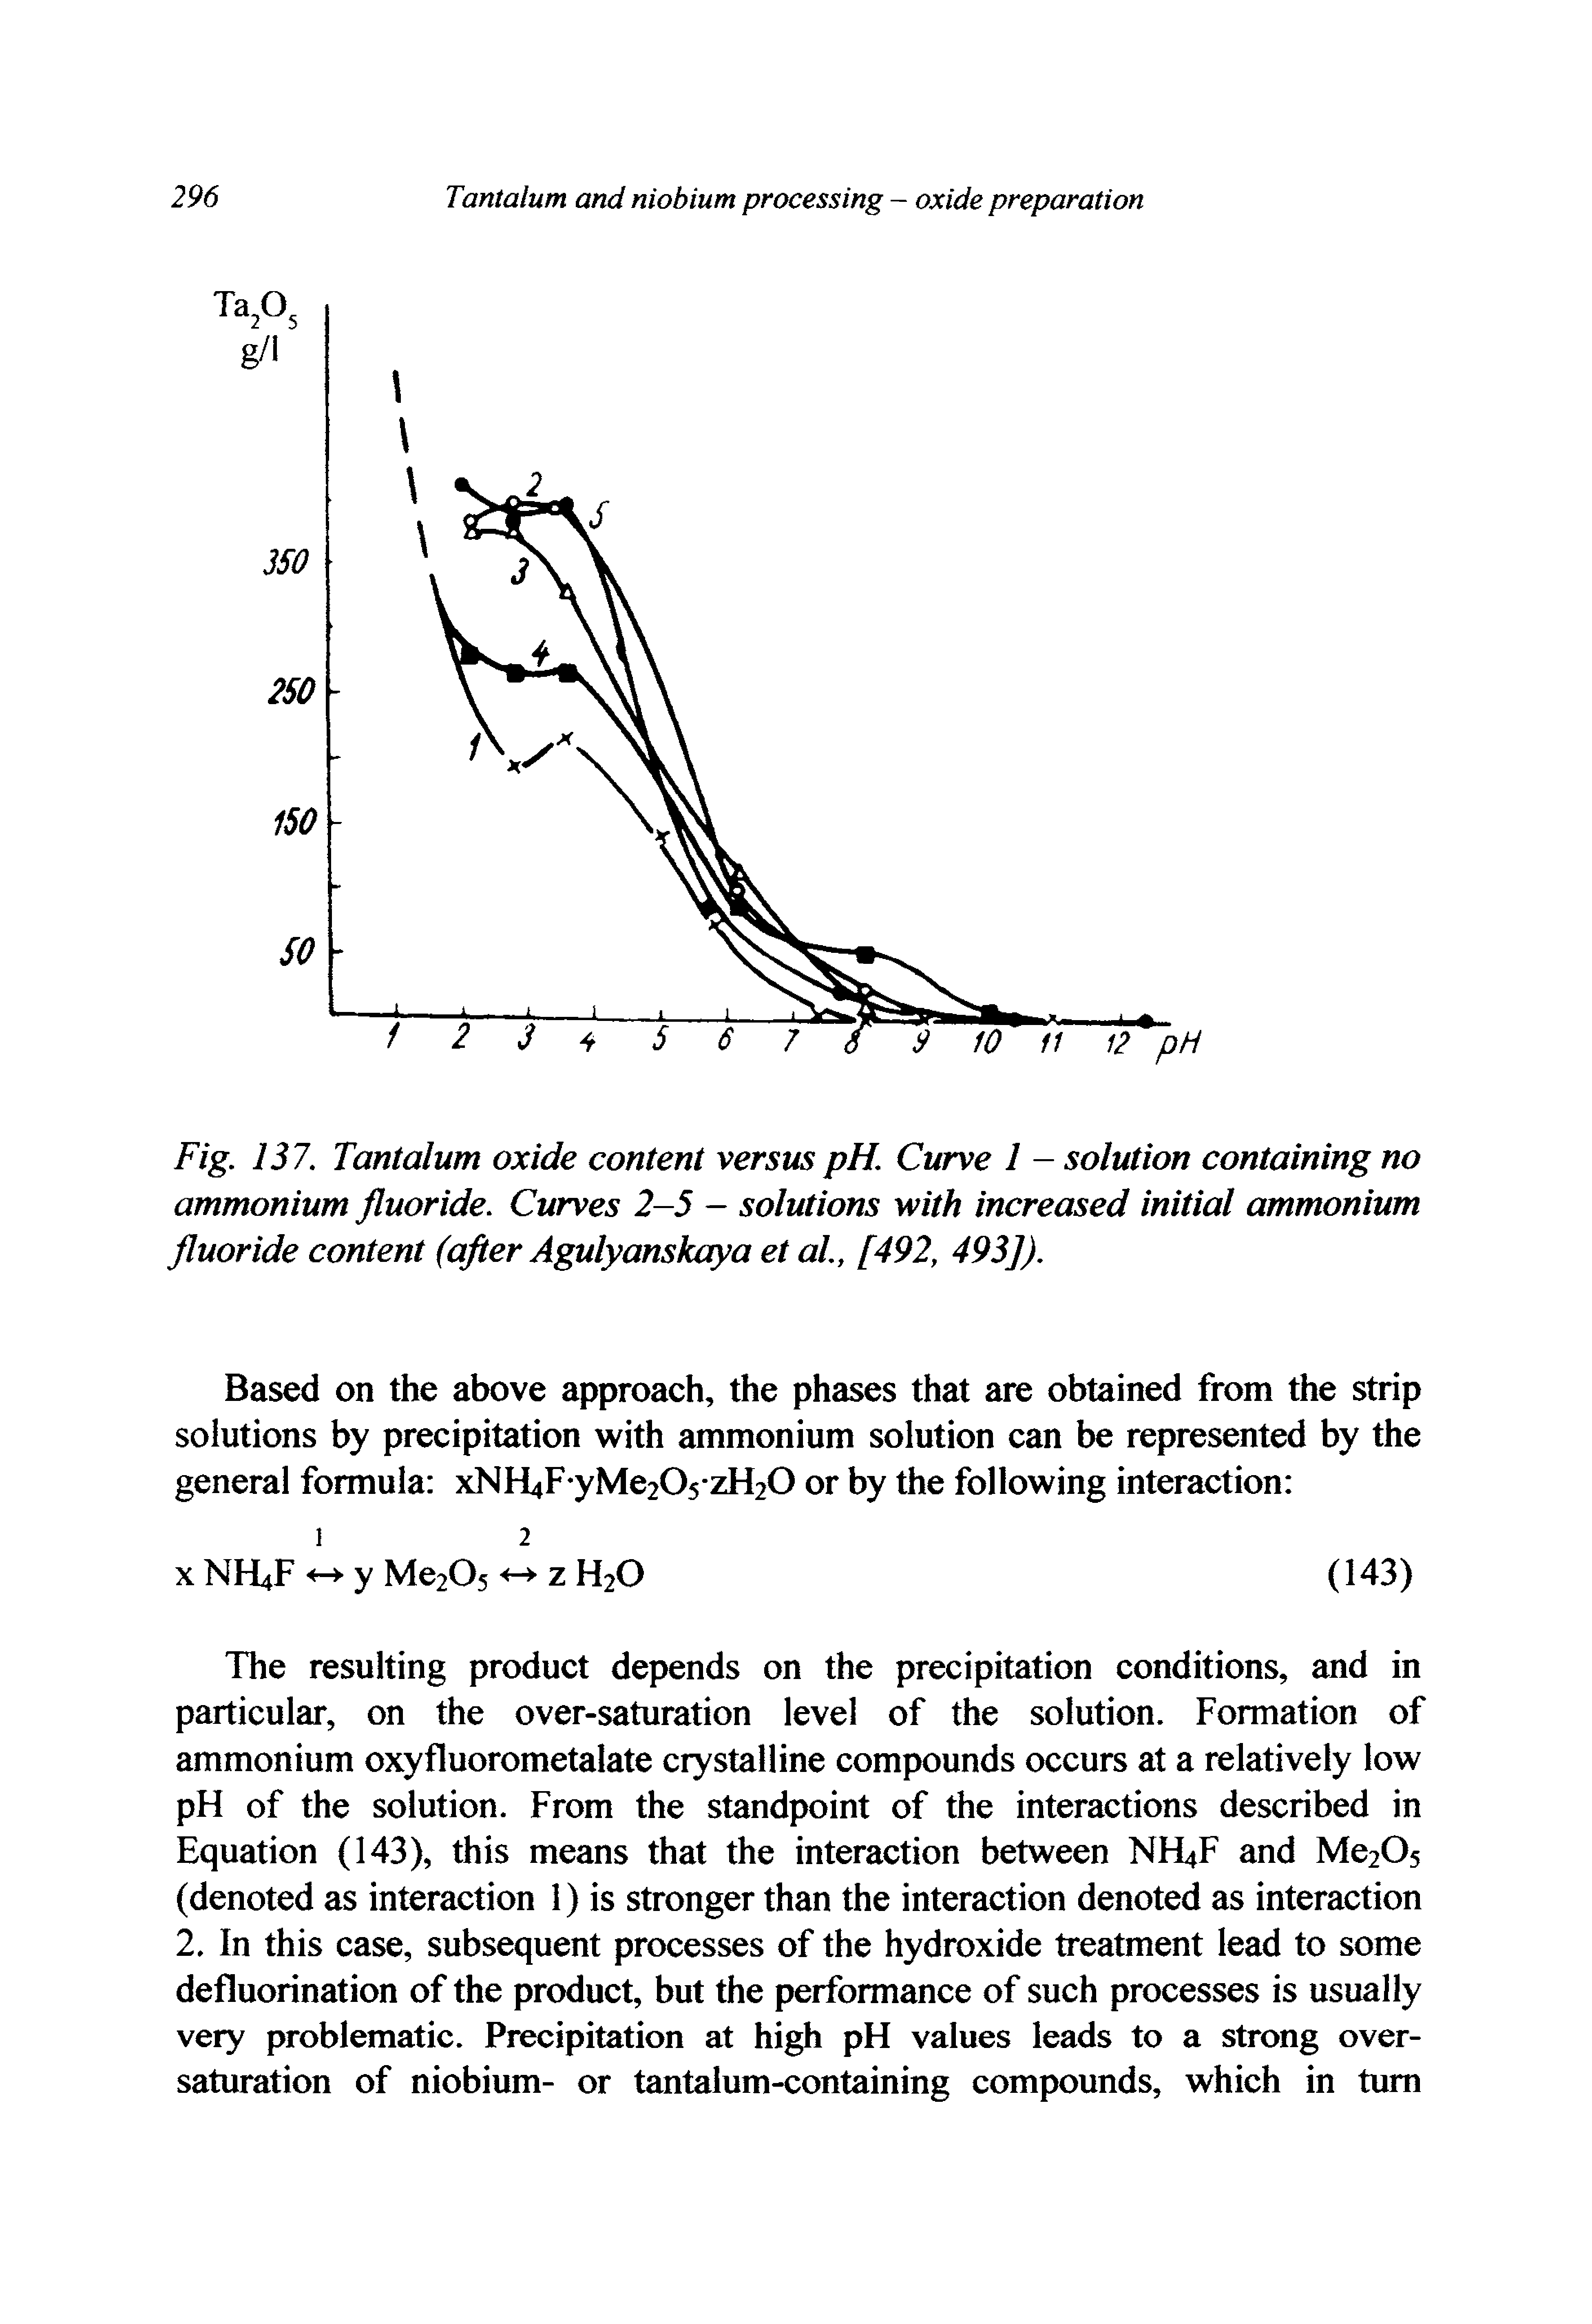 Fig. 137. Tantalum oxide content versus pH. Curve 1 - solution containing no ammonium fluoride. Curves 2-5 - solutions with increased initial ammonium fluoride content (after Agulyanskaya et al., [492, 493]).